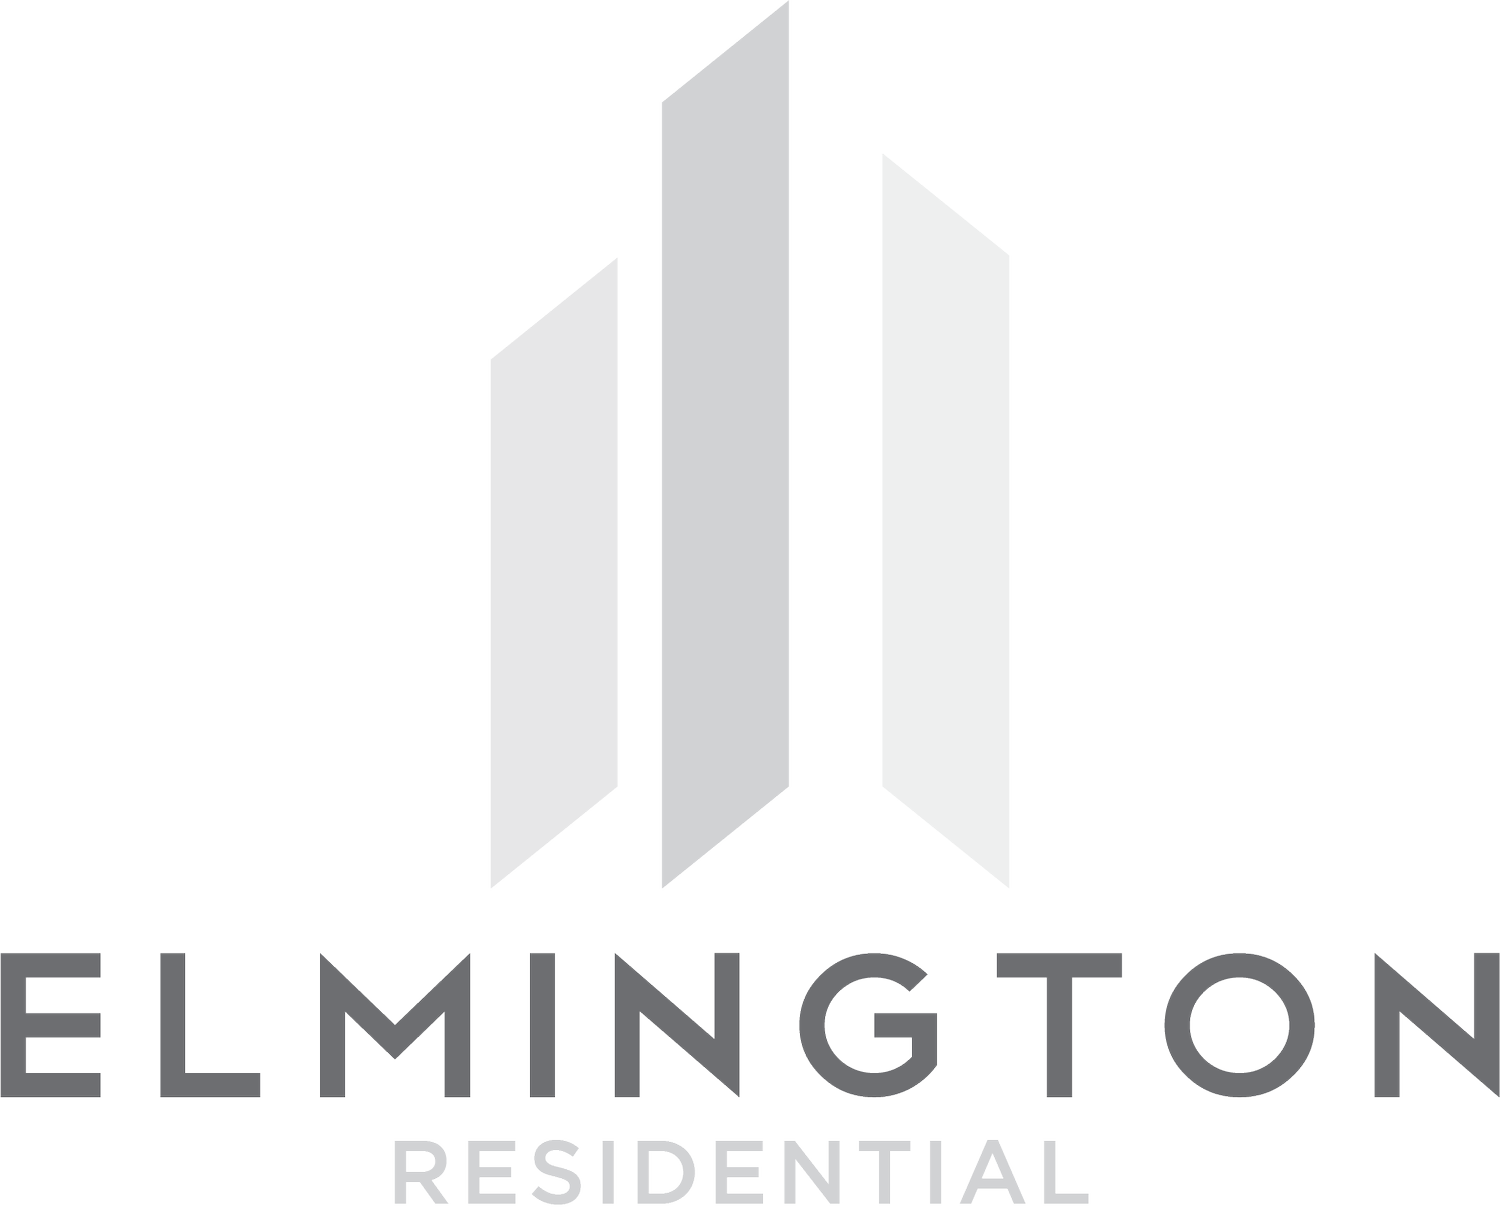 Elmington Residential